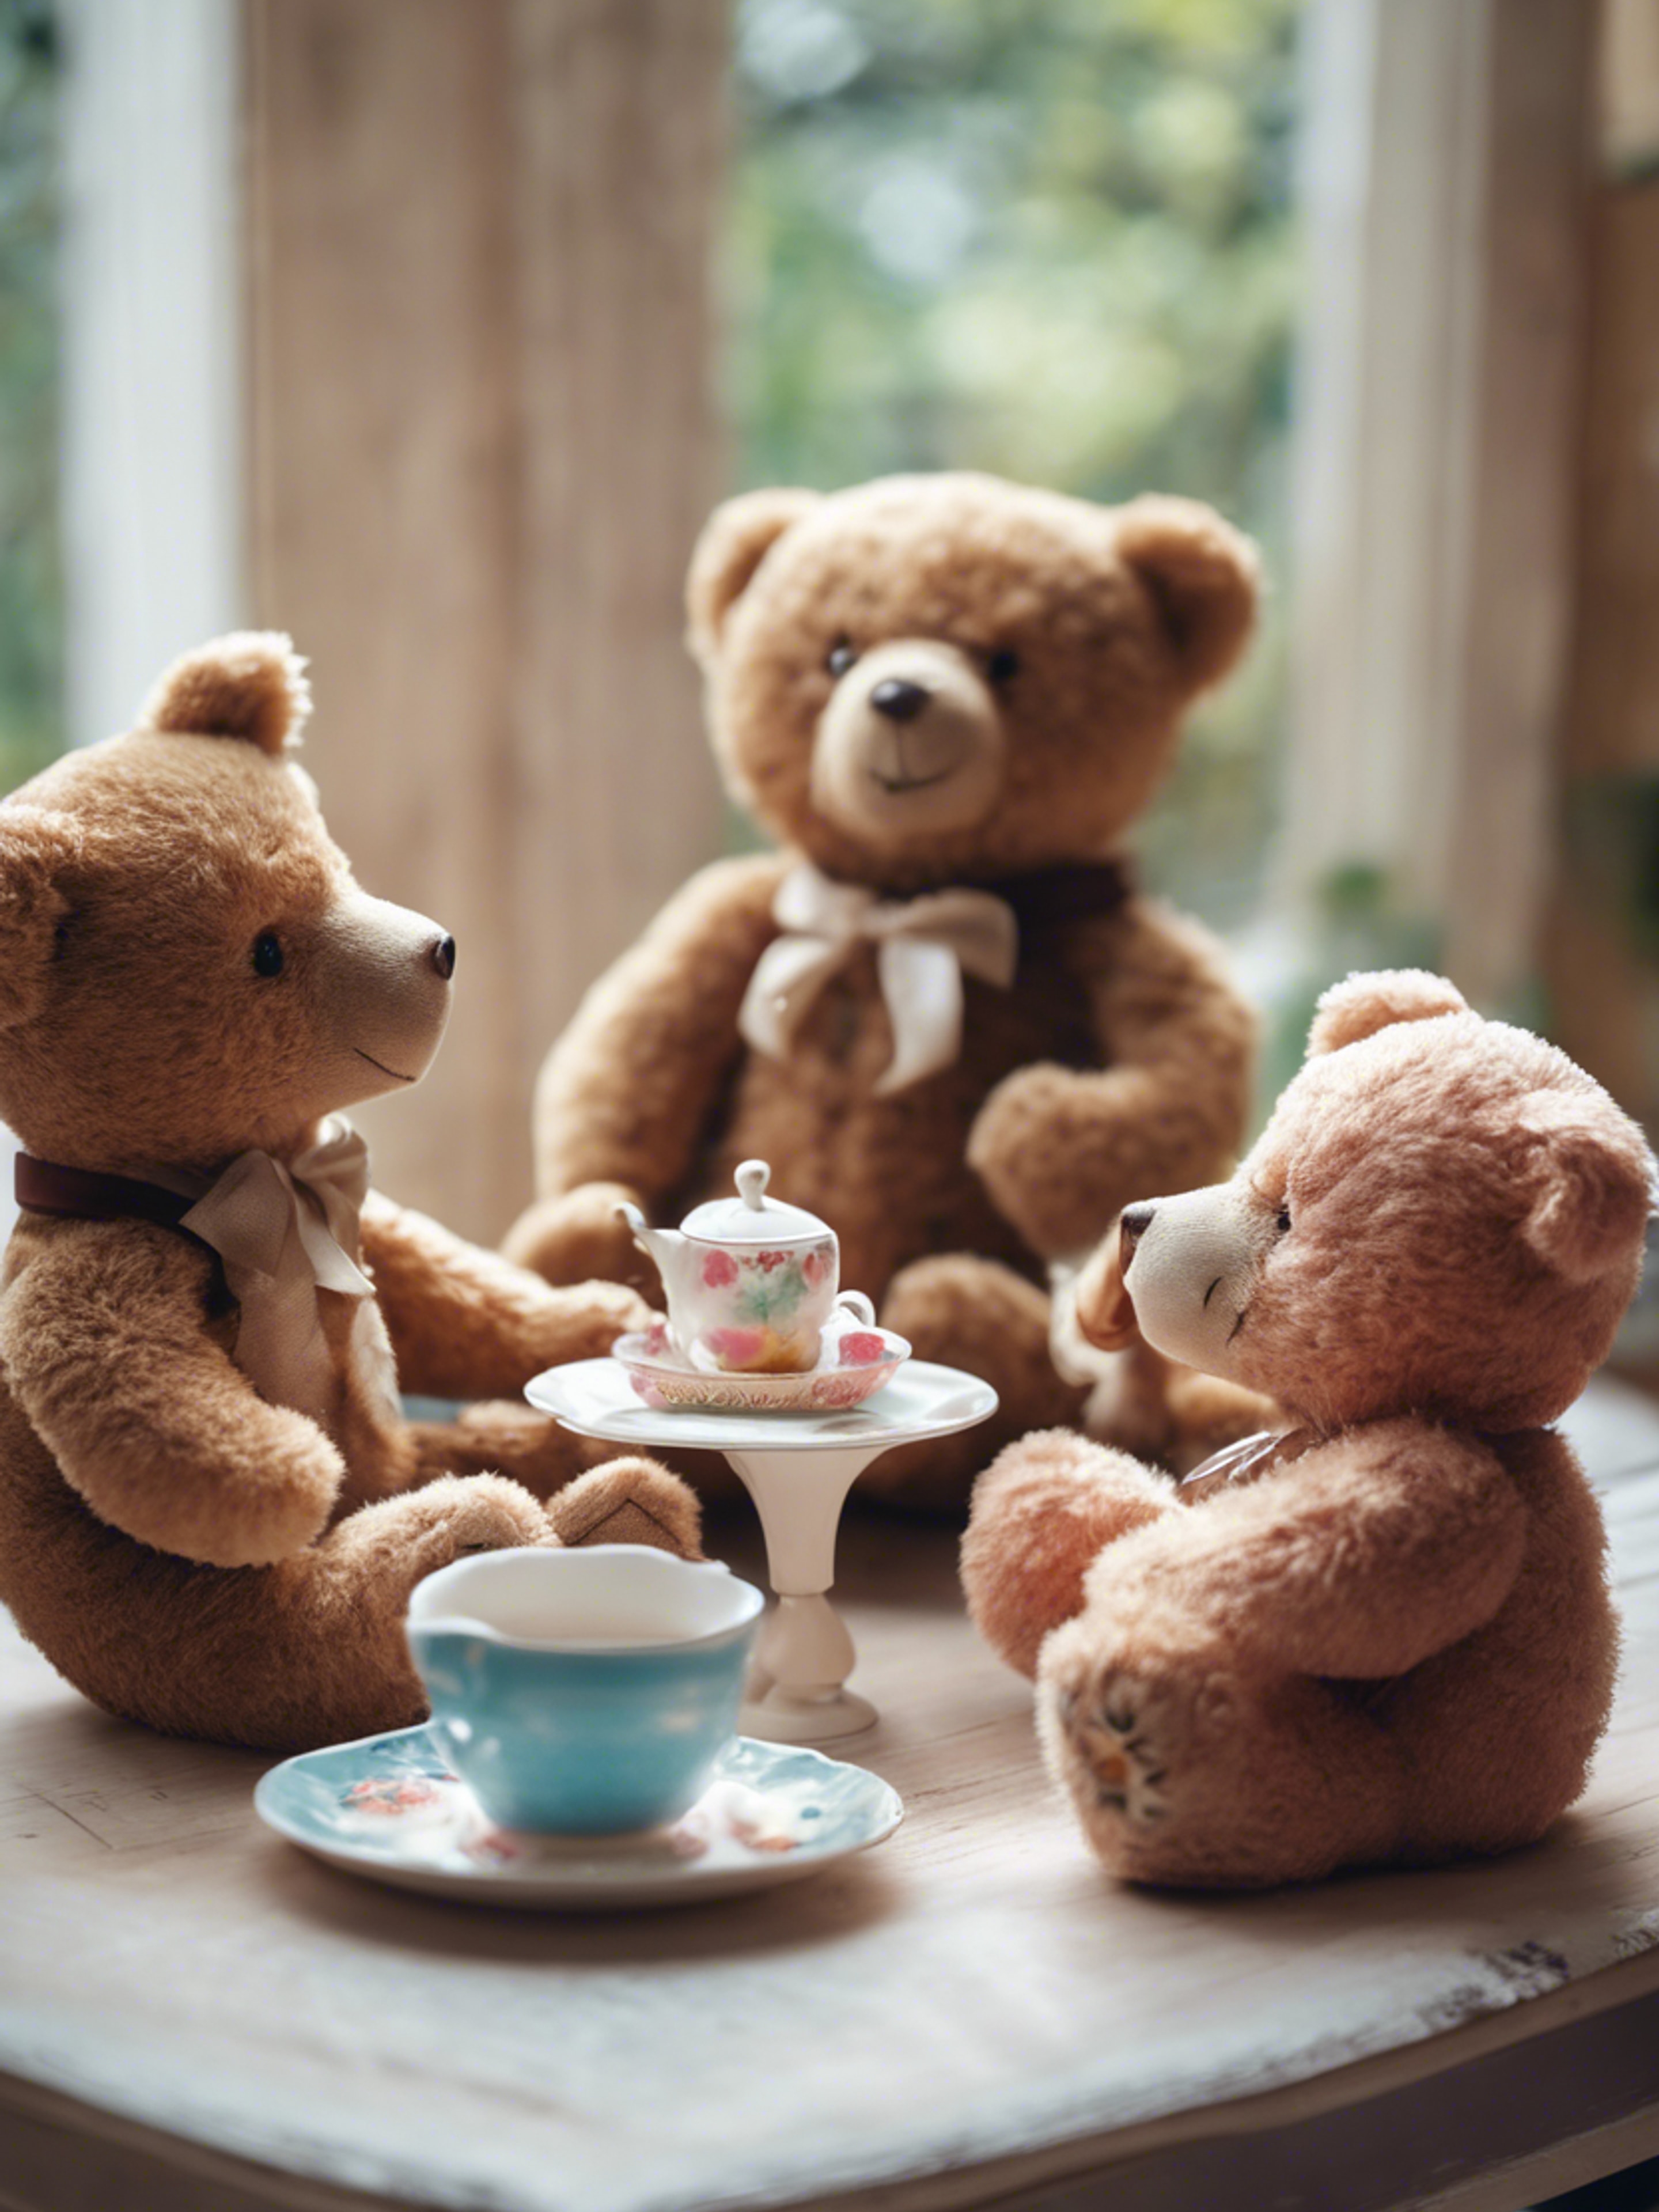 A group of teddy bears having a playful tea party in a child's room. Fond d'écran[5c3b9dbbb3984ccebf50]